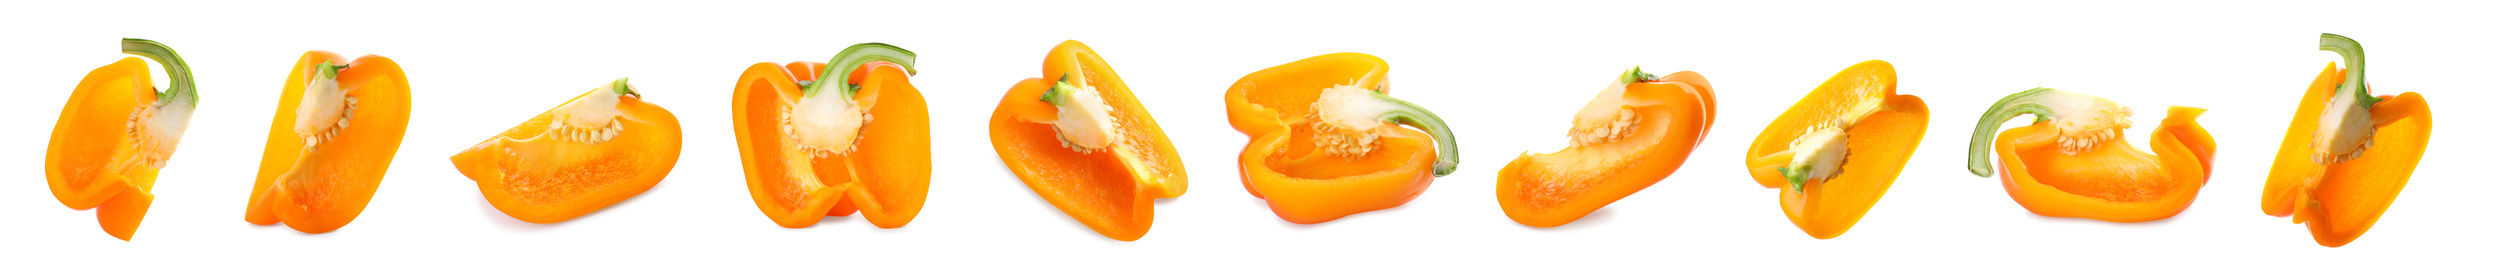 Set of cut ripe orange bell peppers on white background. Banner design 